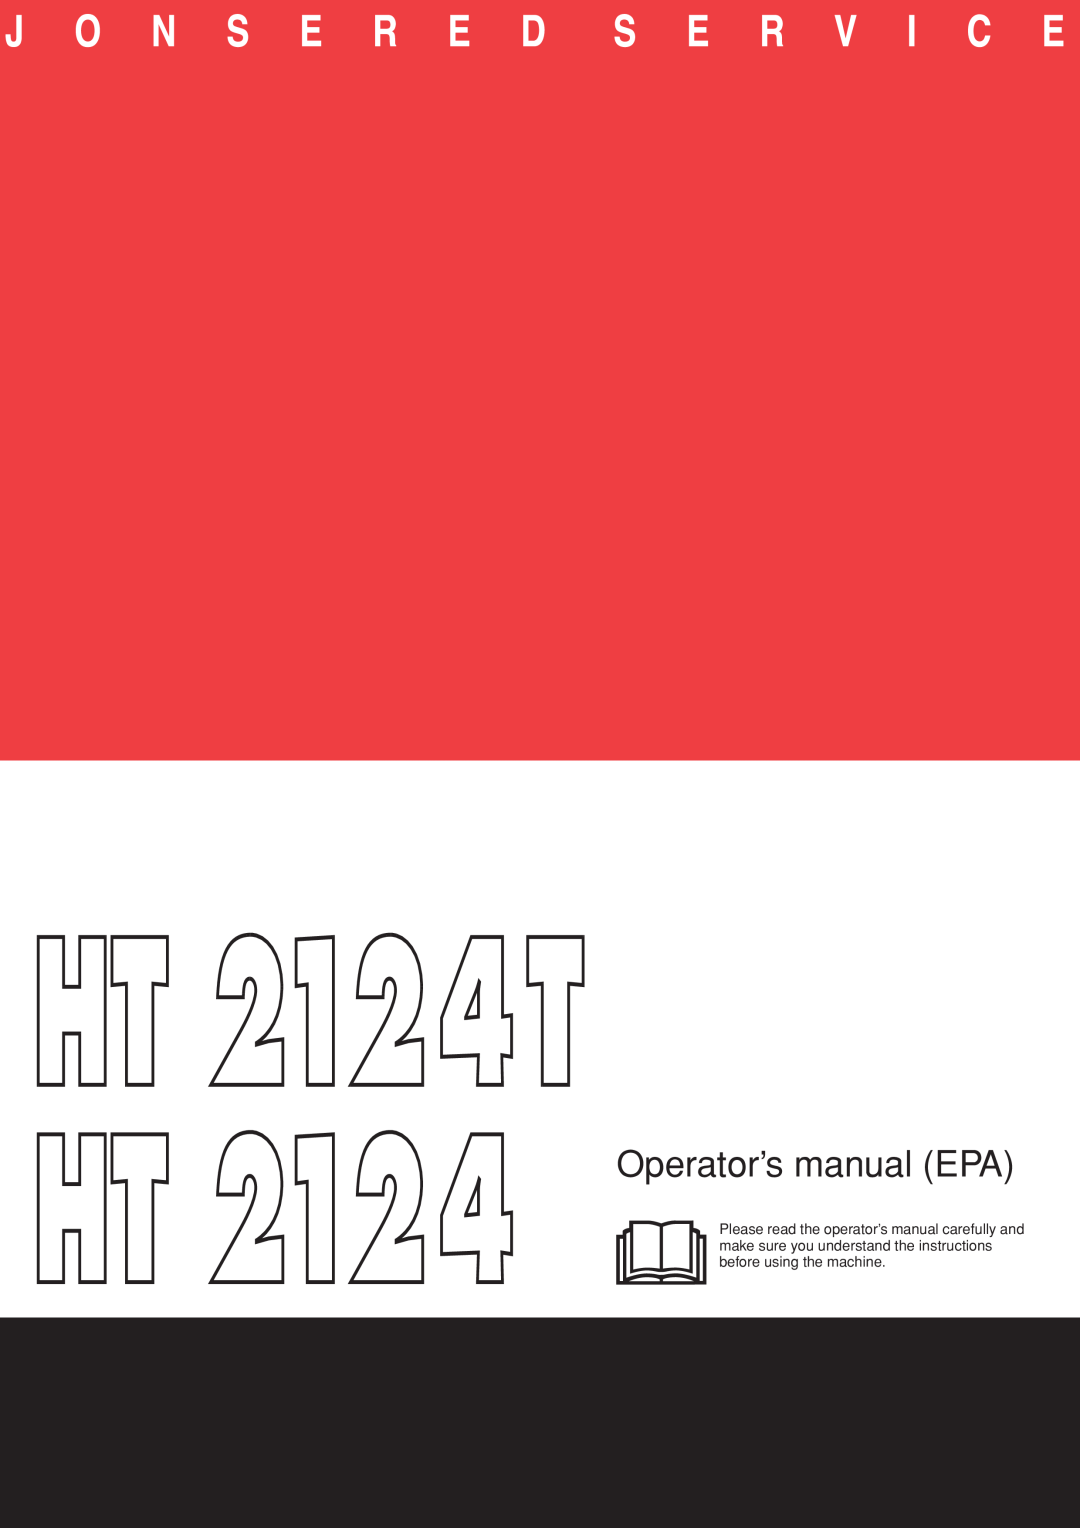 Jonsered HT 2124T manual Operator’s manual EPA 